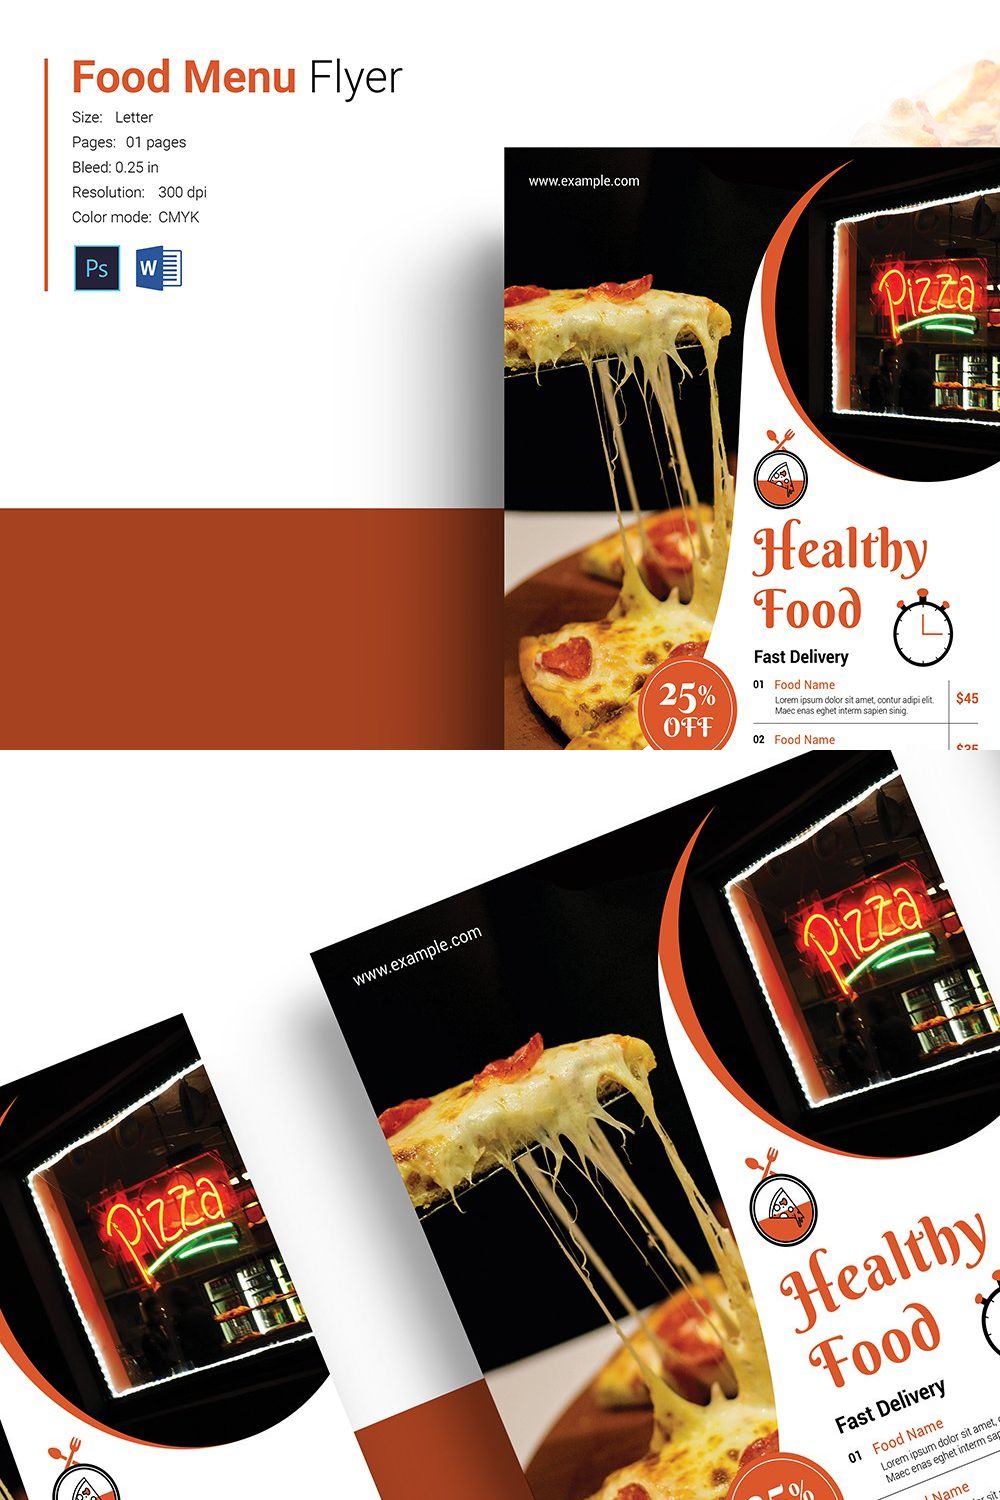 Food Menu Flyer pinterest preview image.